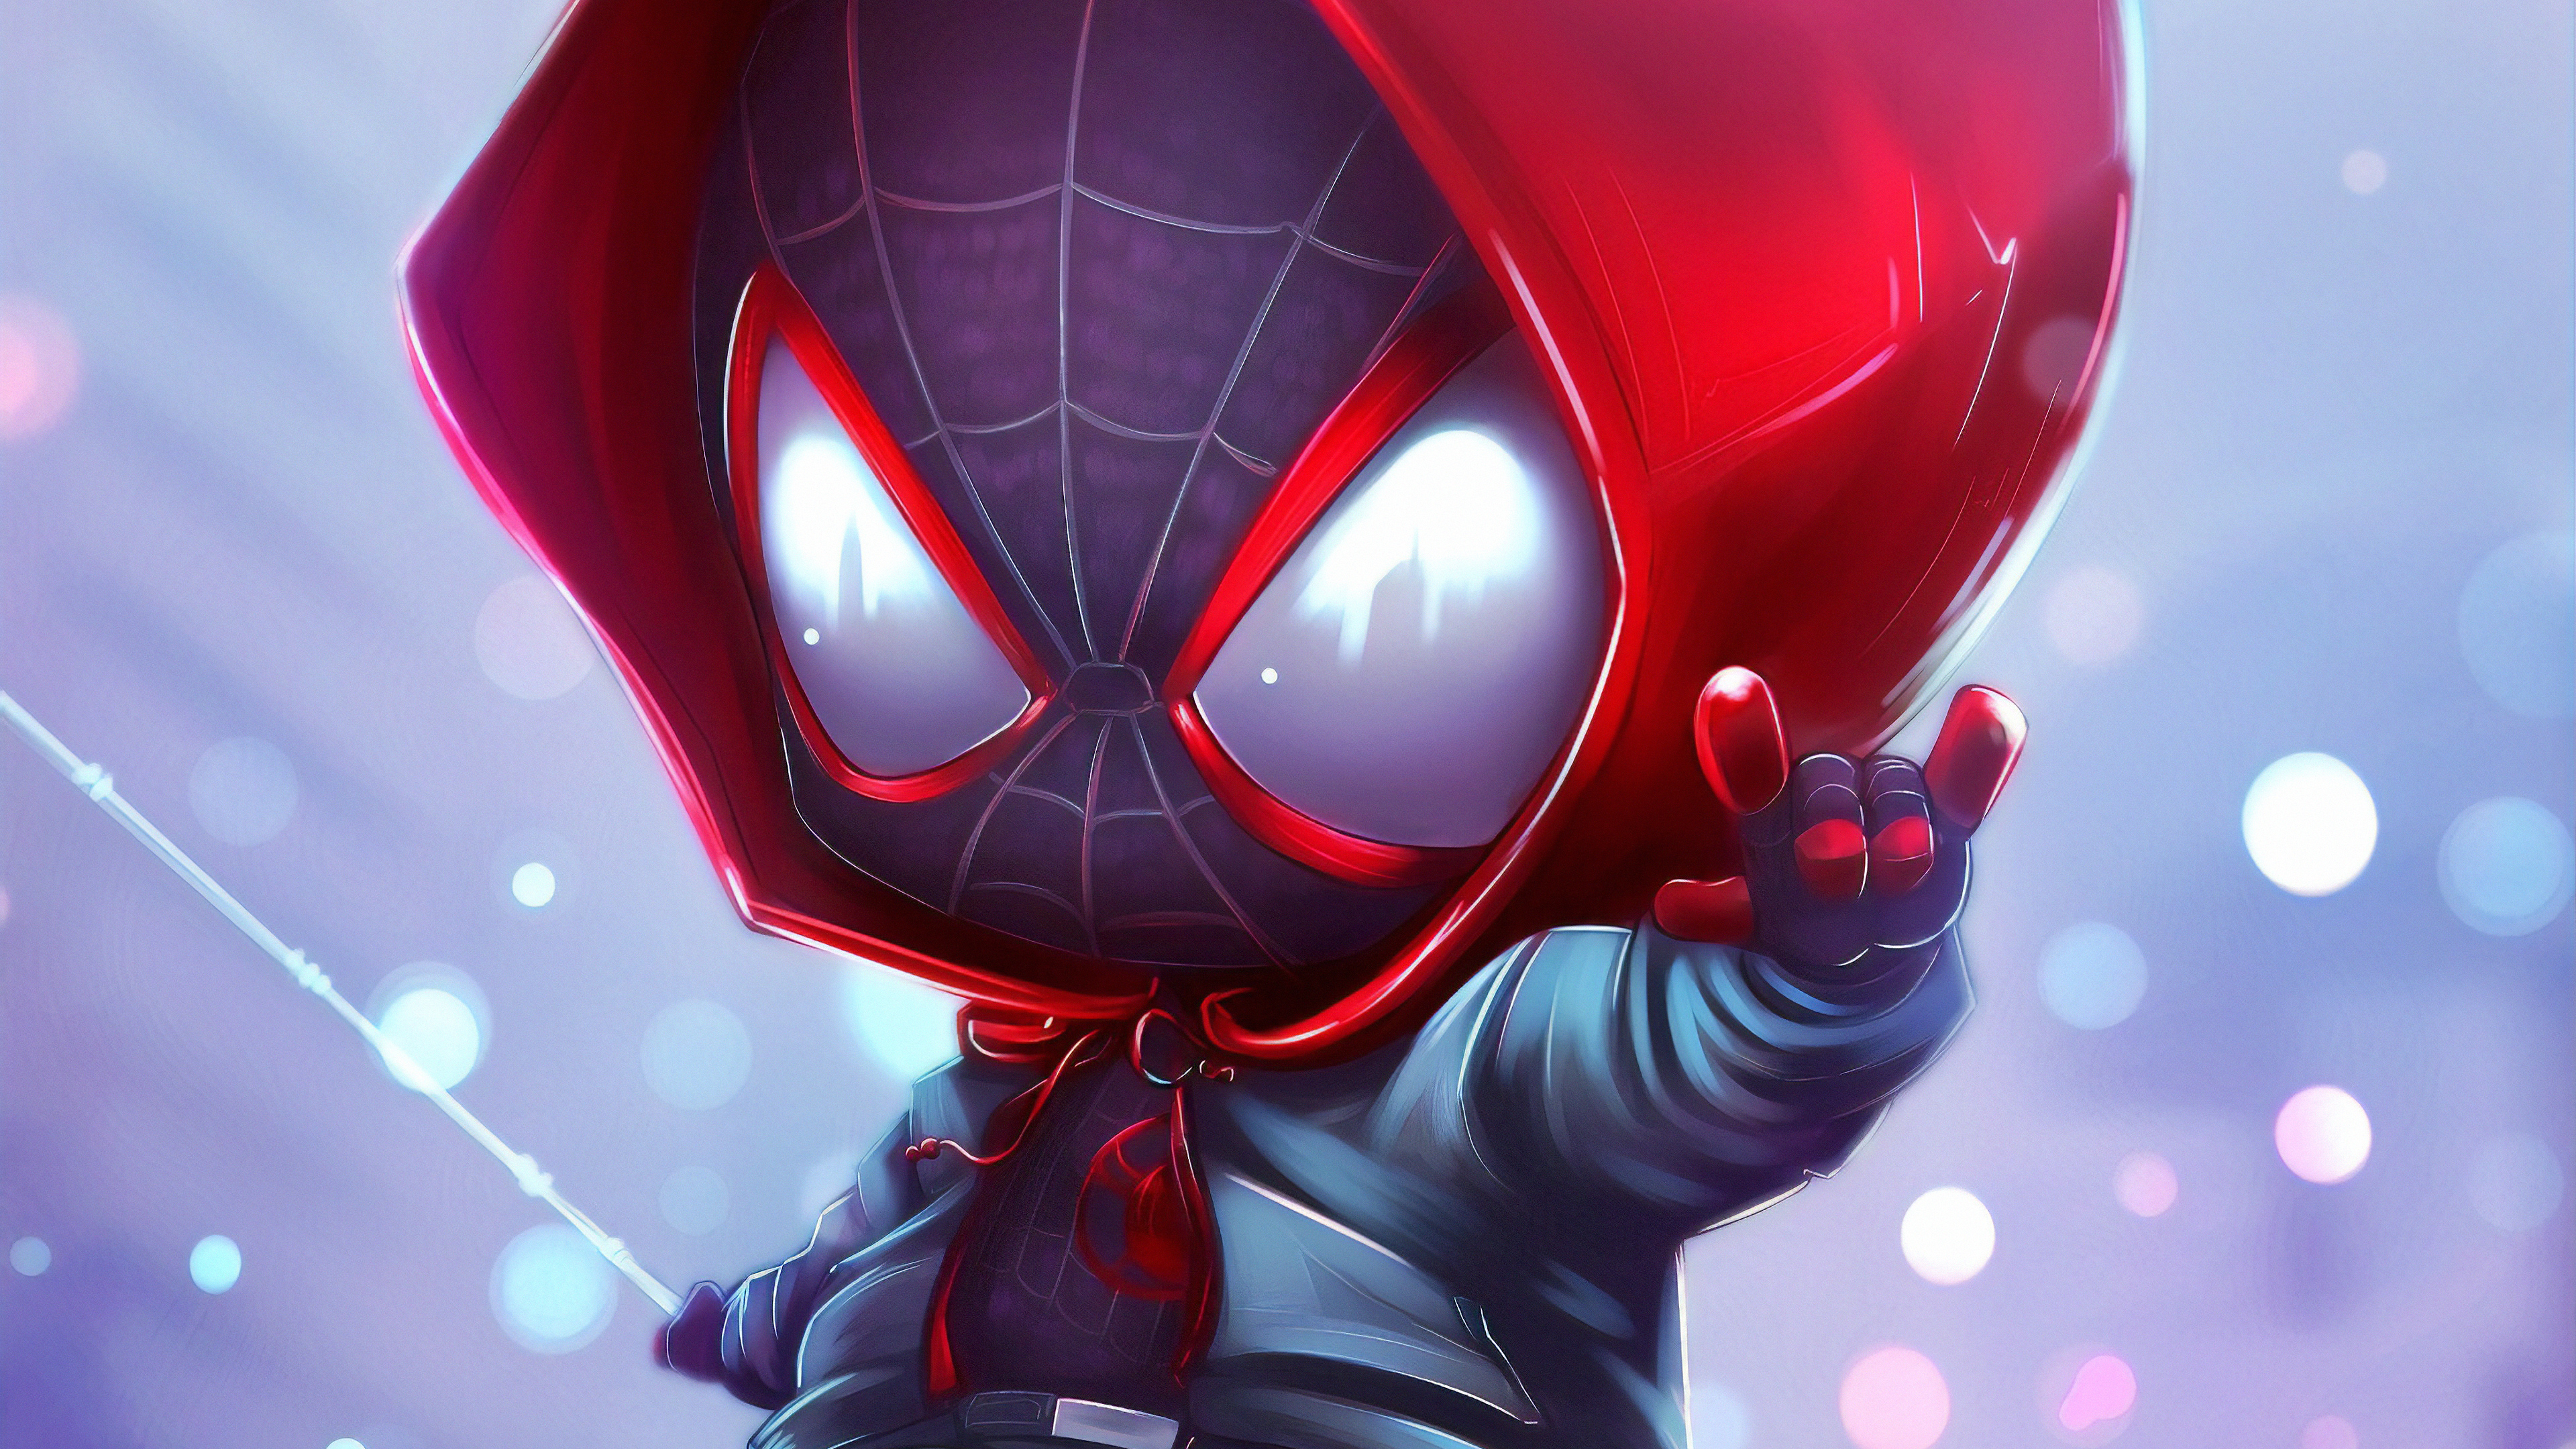 Spider-Man 4k Ultra HD Wallpaper by Vijay Pratap Singh